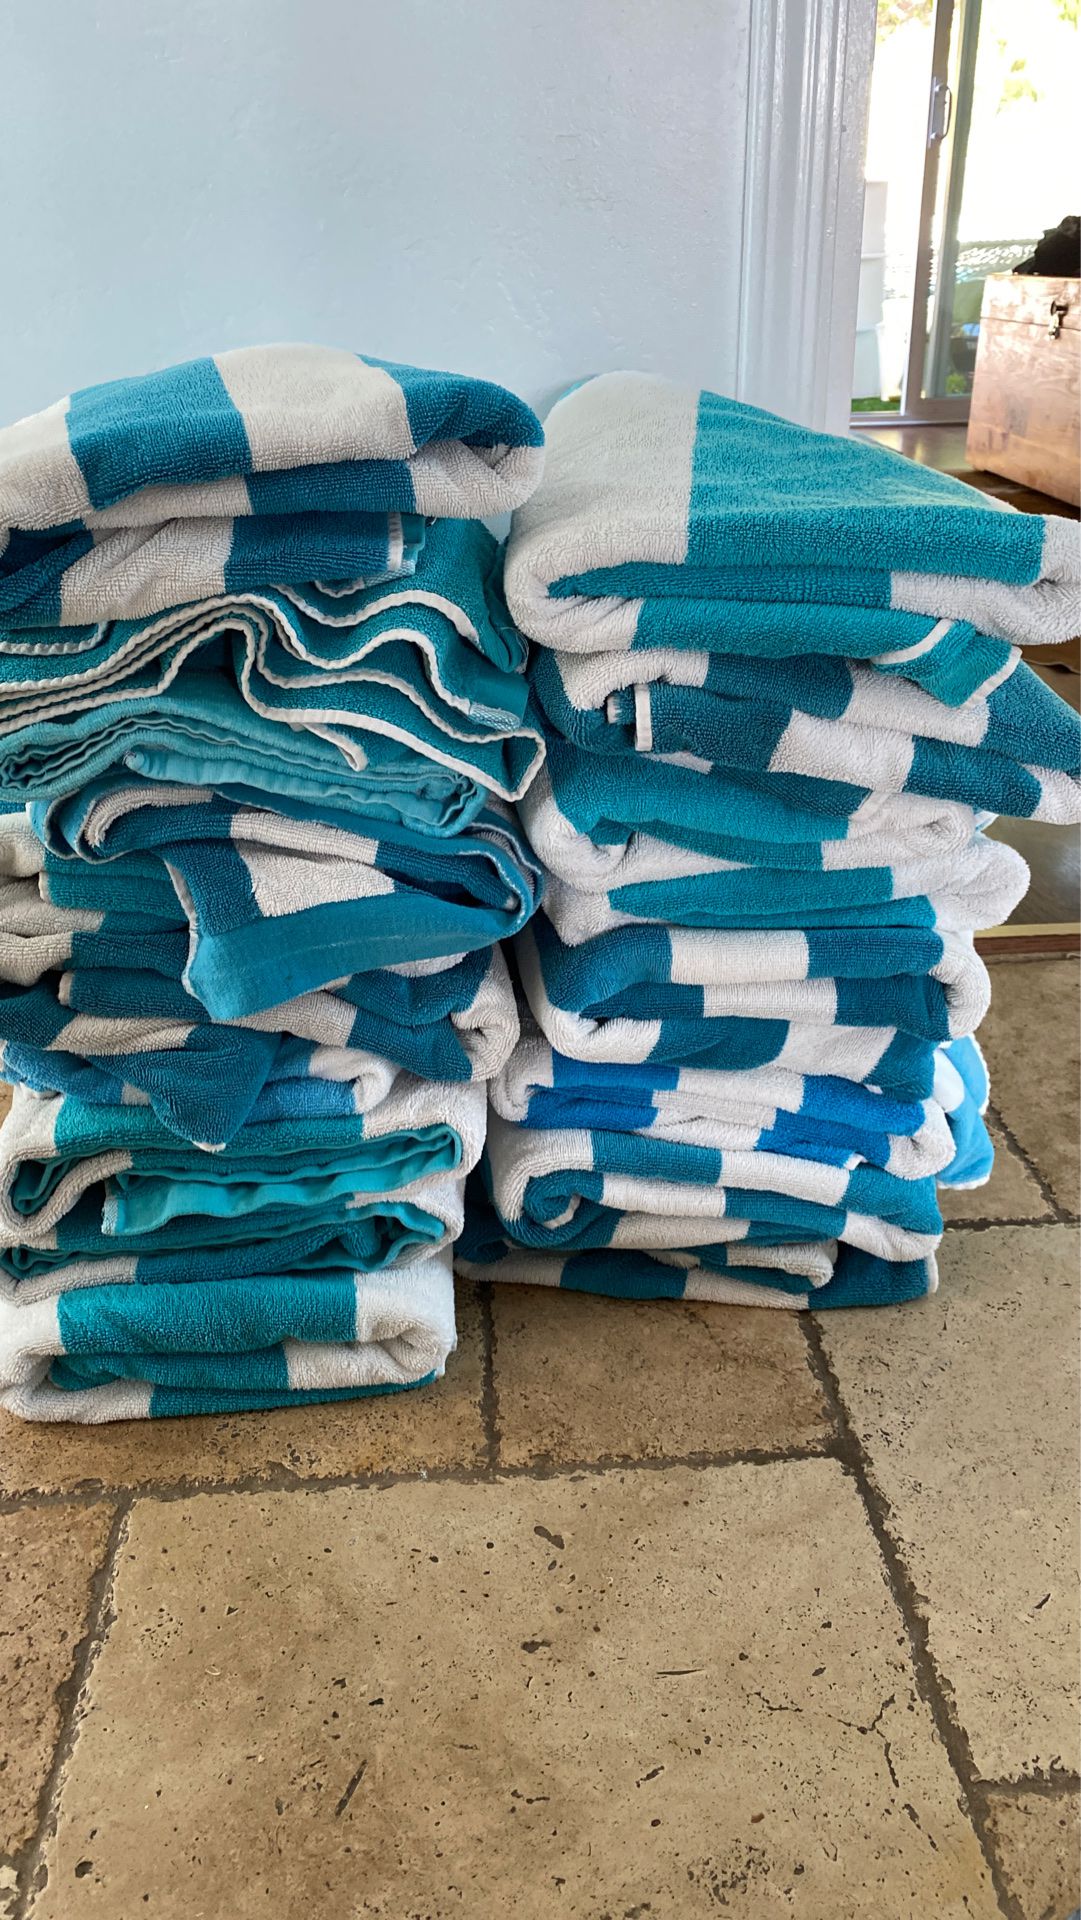 Resort beach towels